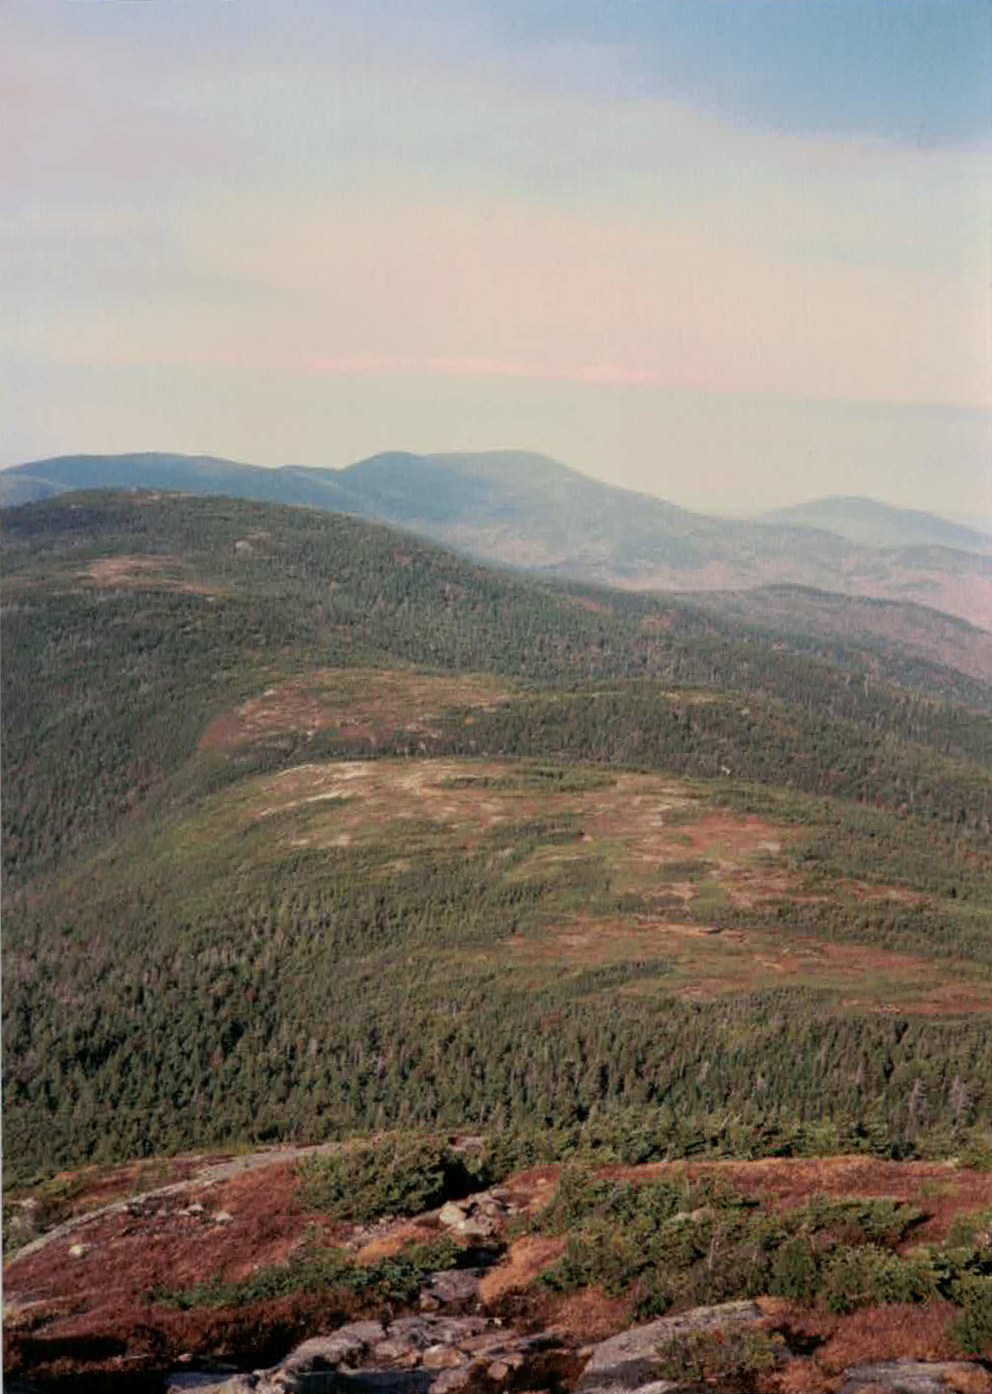 Summit vista